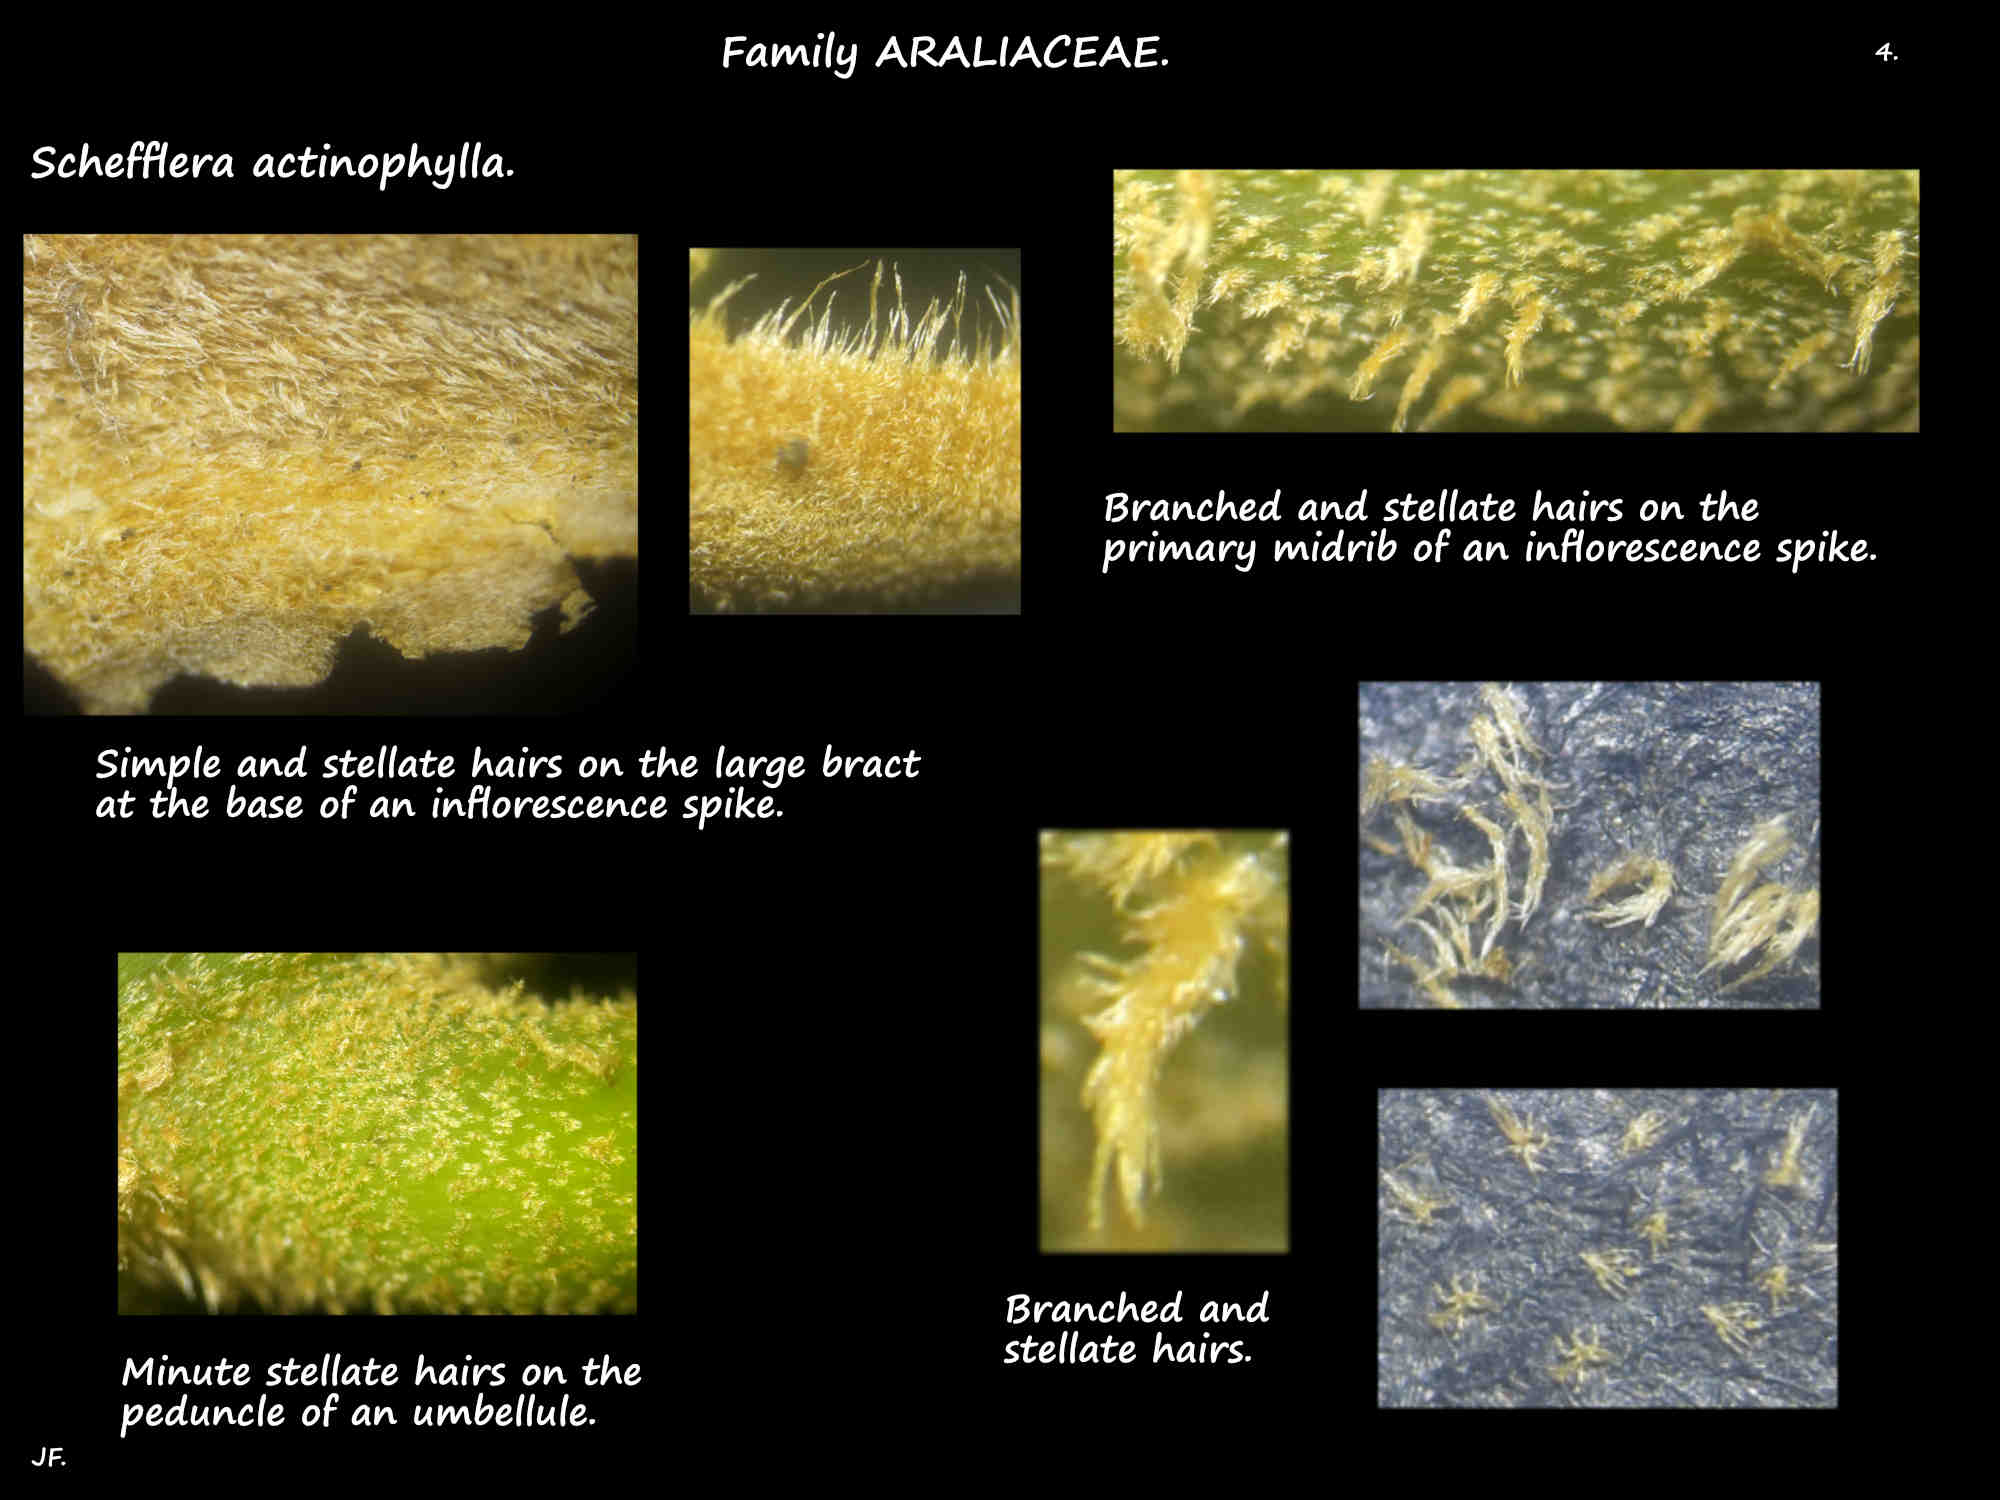 4 Types of hairs on Schefflera actinophylla inflorescences